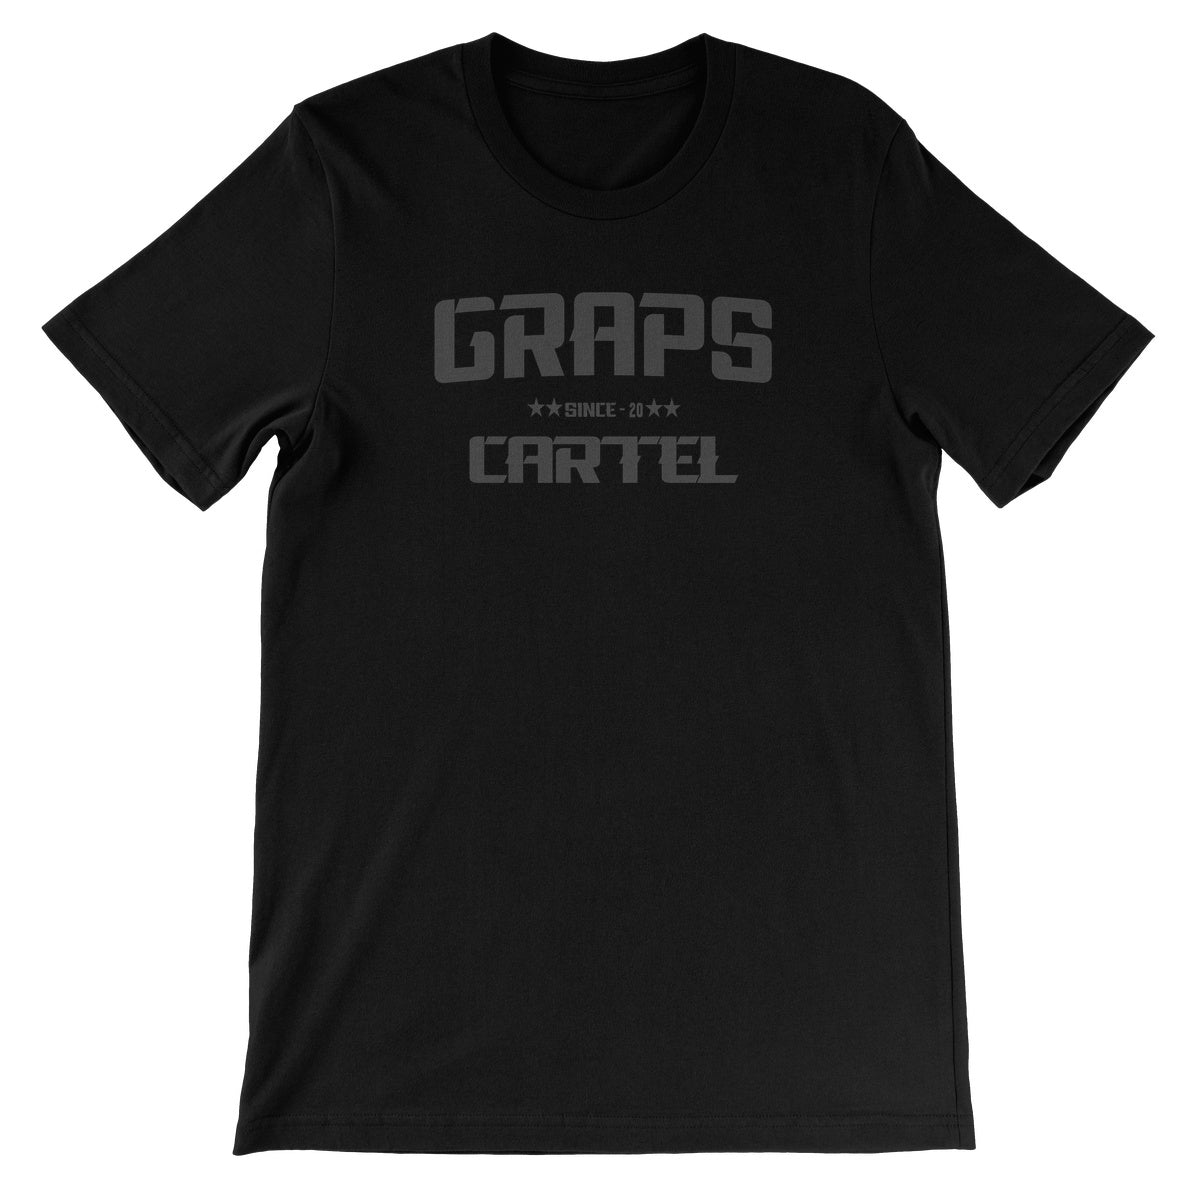 GRAPS - Cartel Grey Unisex Short Sleeve T-Shirt